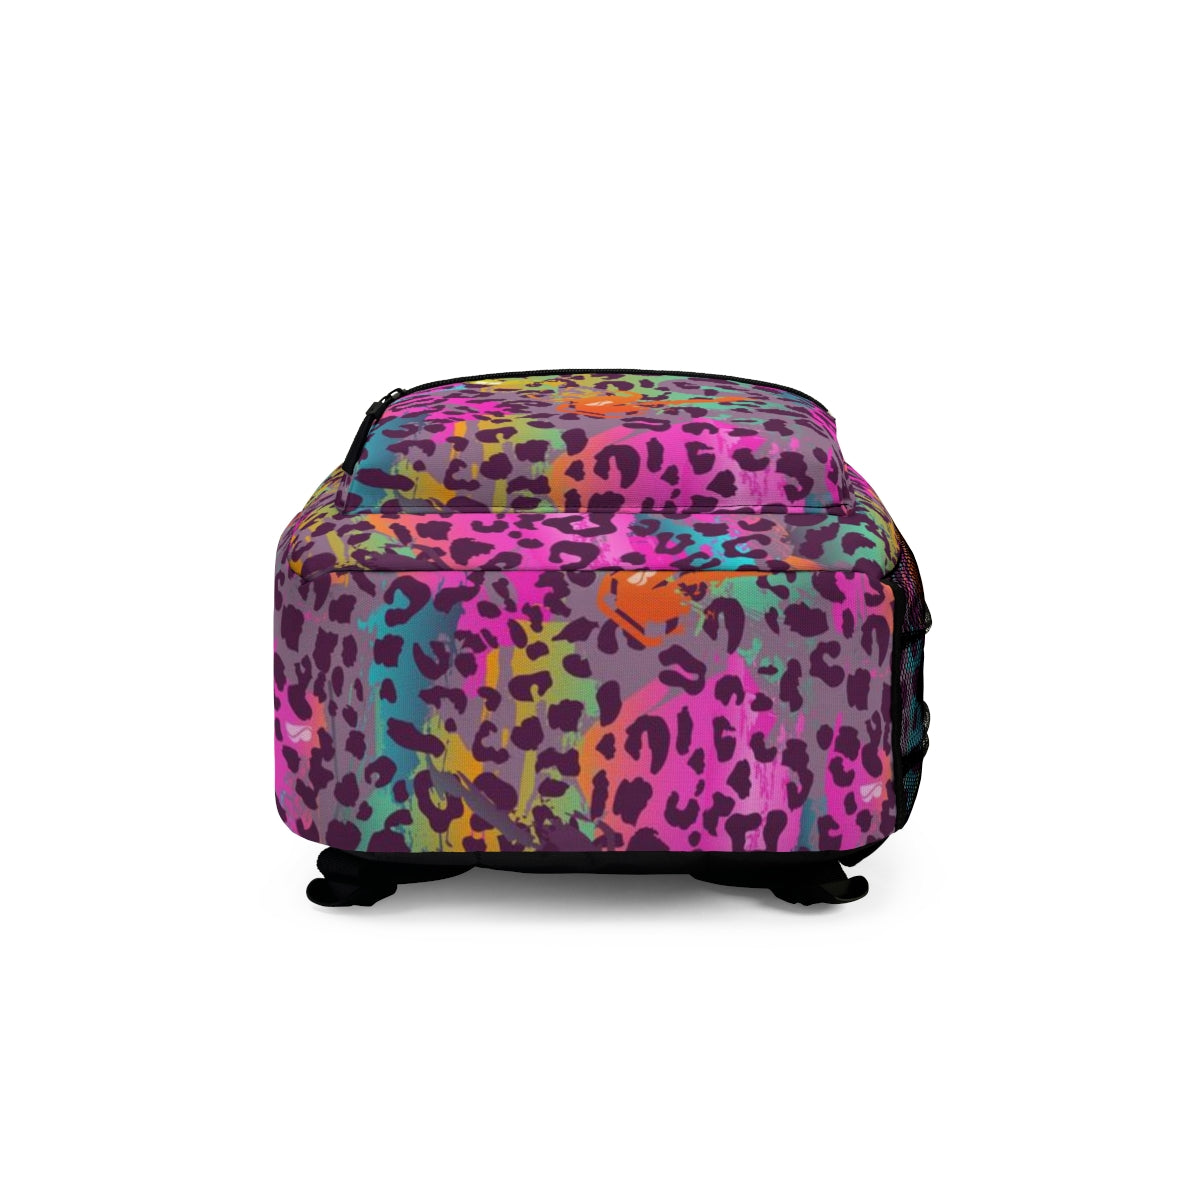 Backpack - Rainbow Cheetah